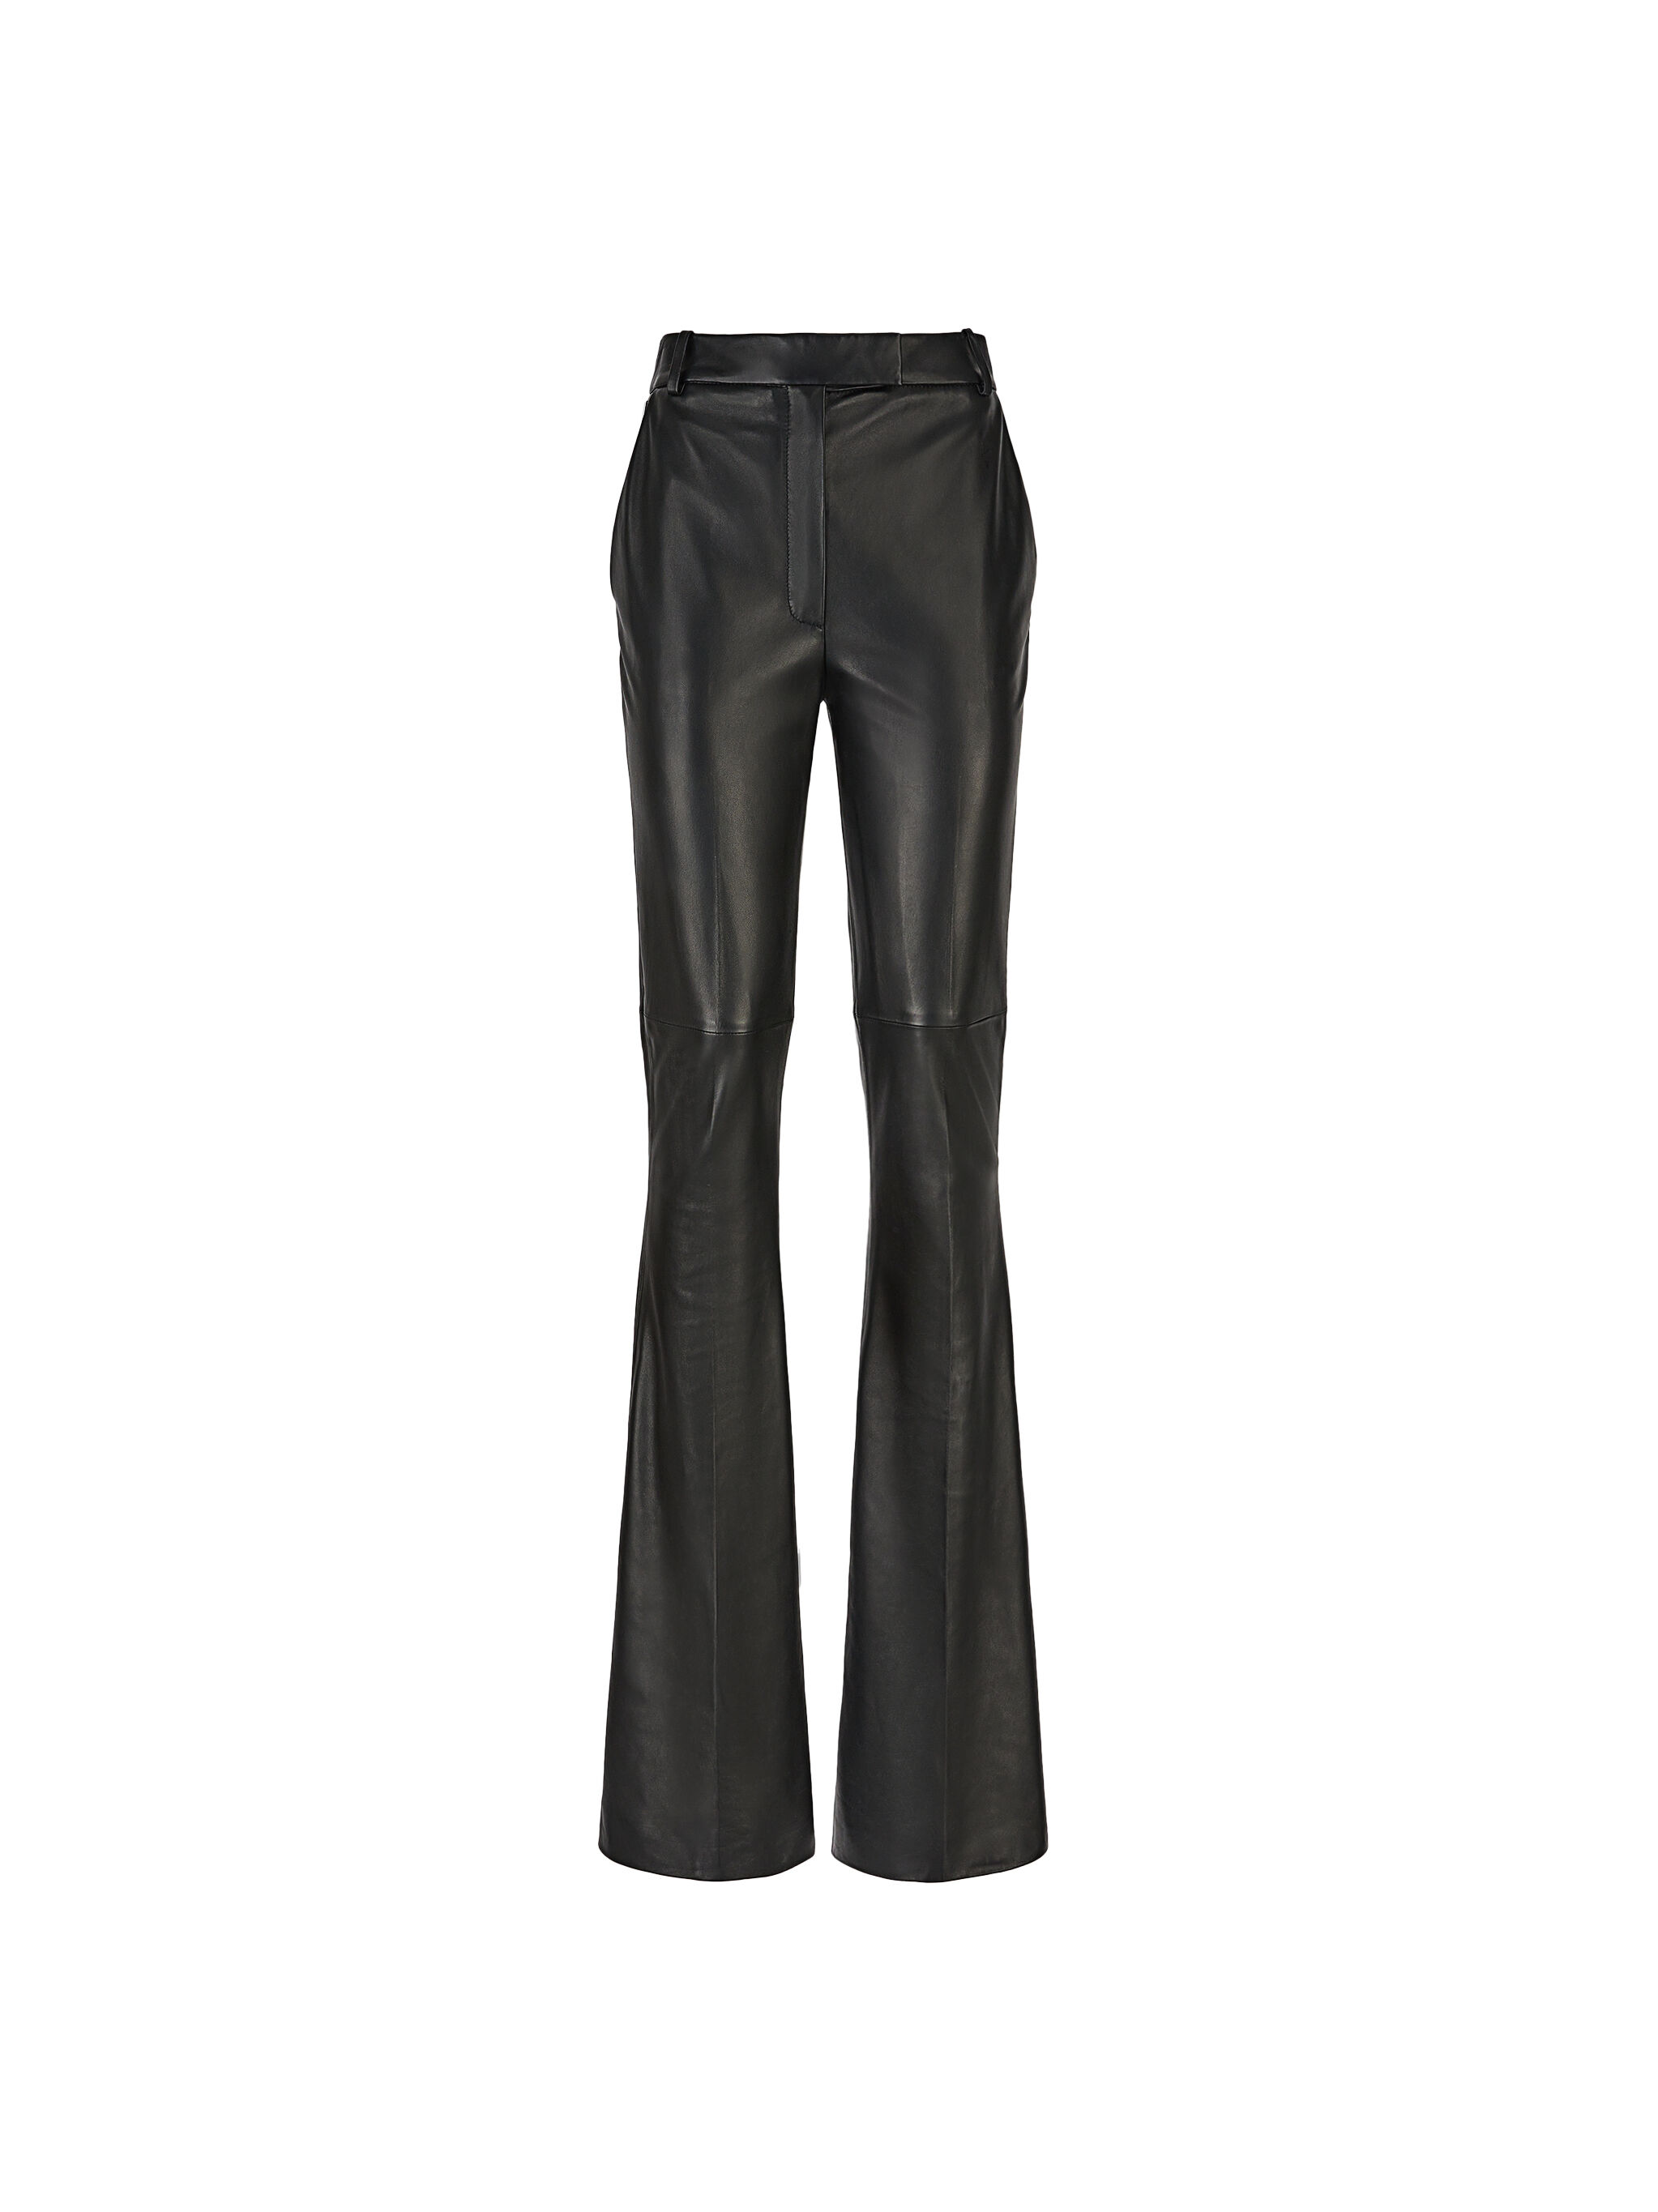 Mondetta Women's Pants Size L Pull On Wrinkle Resistant w/Stretch Black